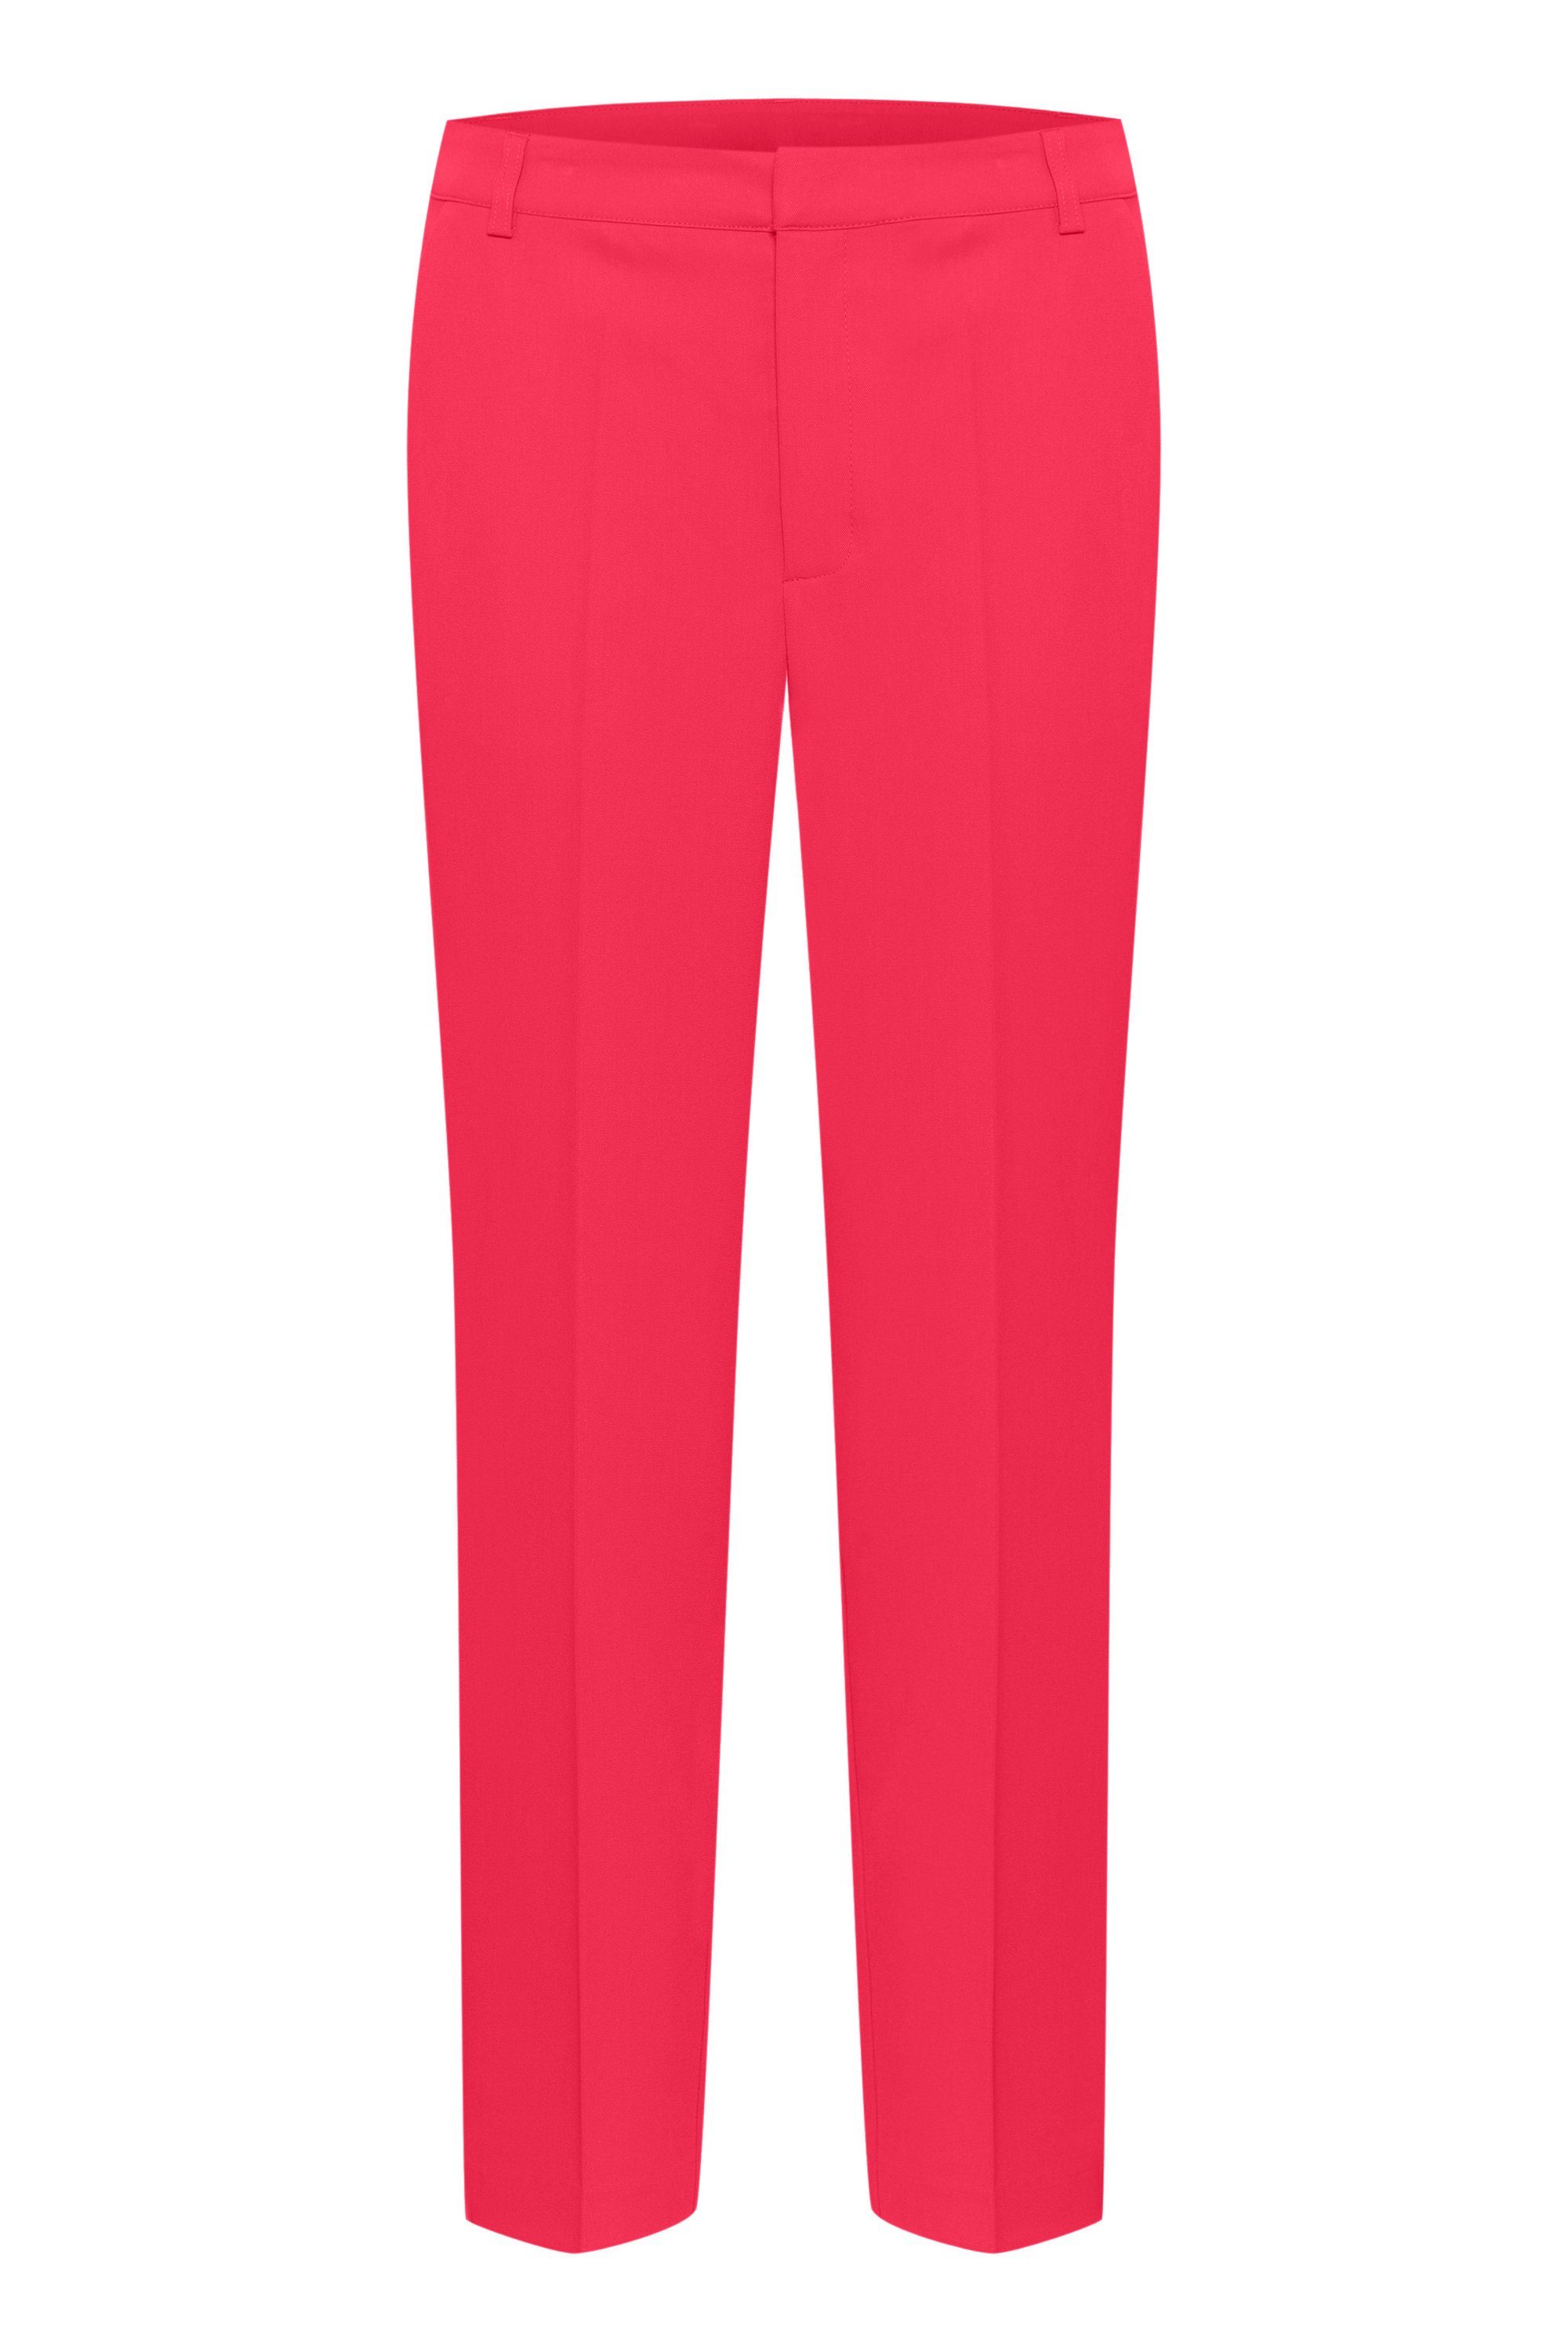 KAFFE Anzughose Pants KAsakura Pink Virtual Suiting